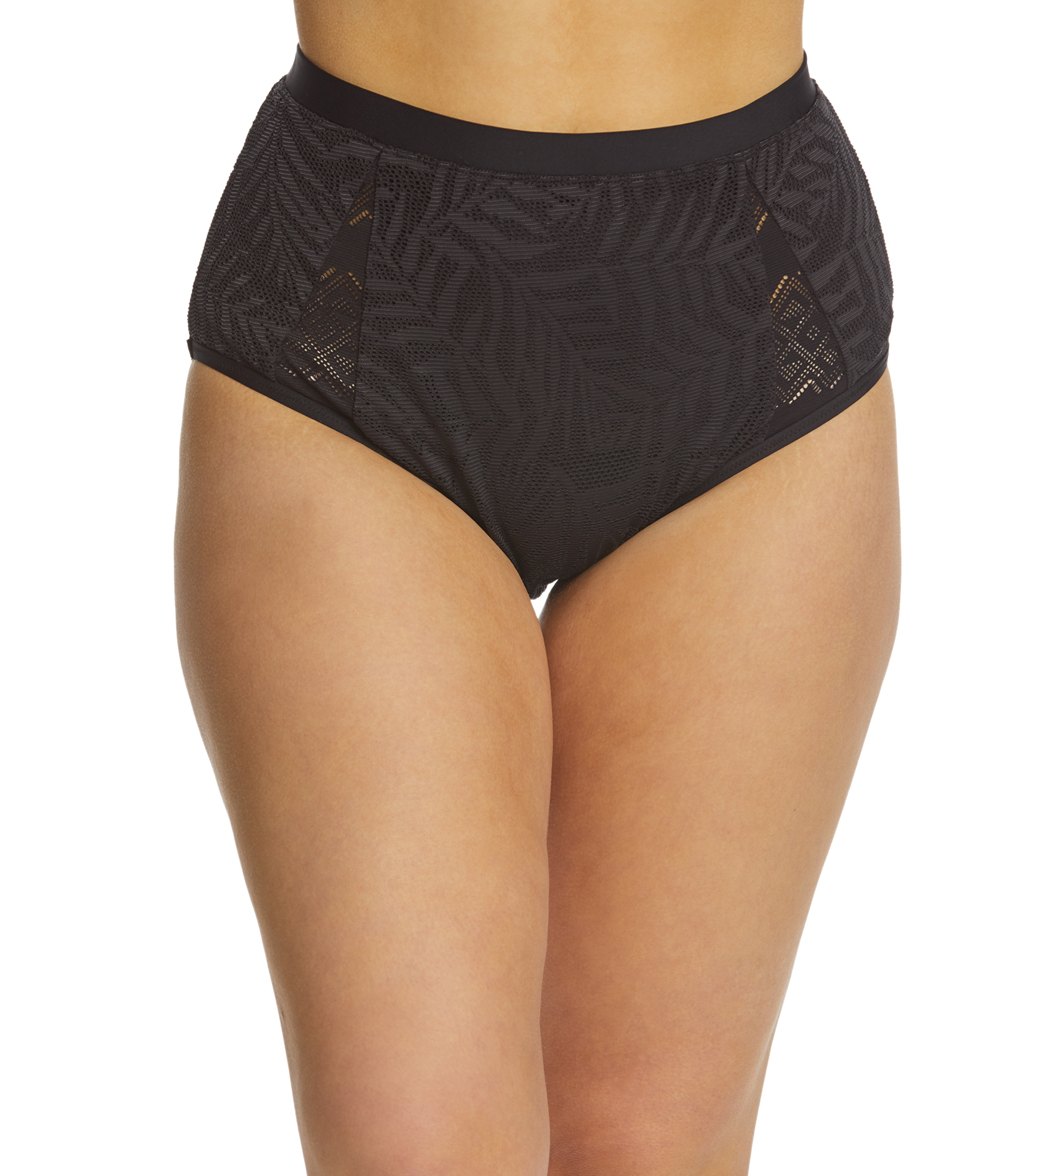 Jessica Simpson Plus Size Crochet High Waist Bikini Bottom - Black 0X - Swimoutlet.com